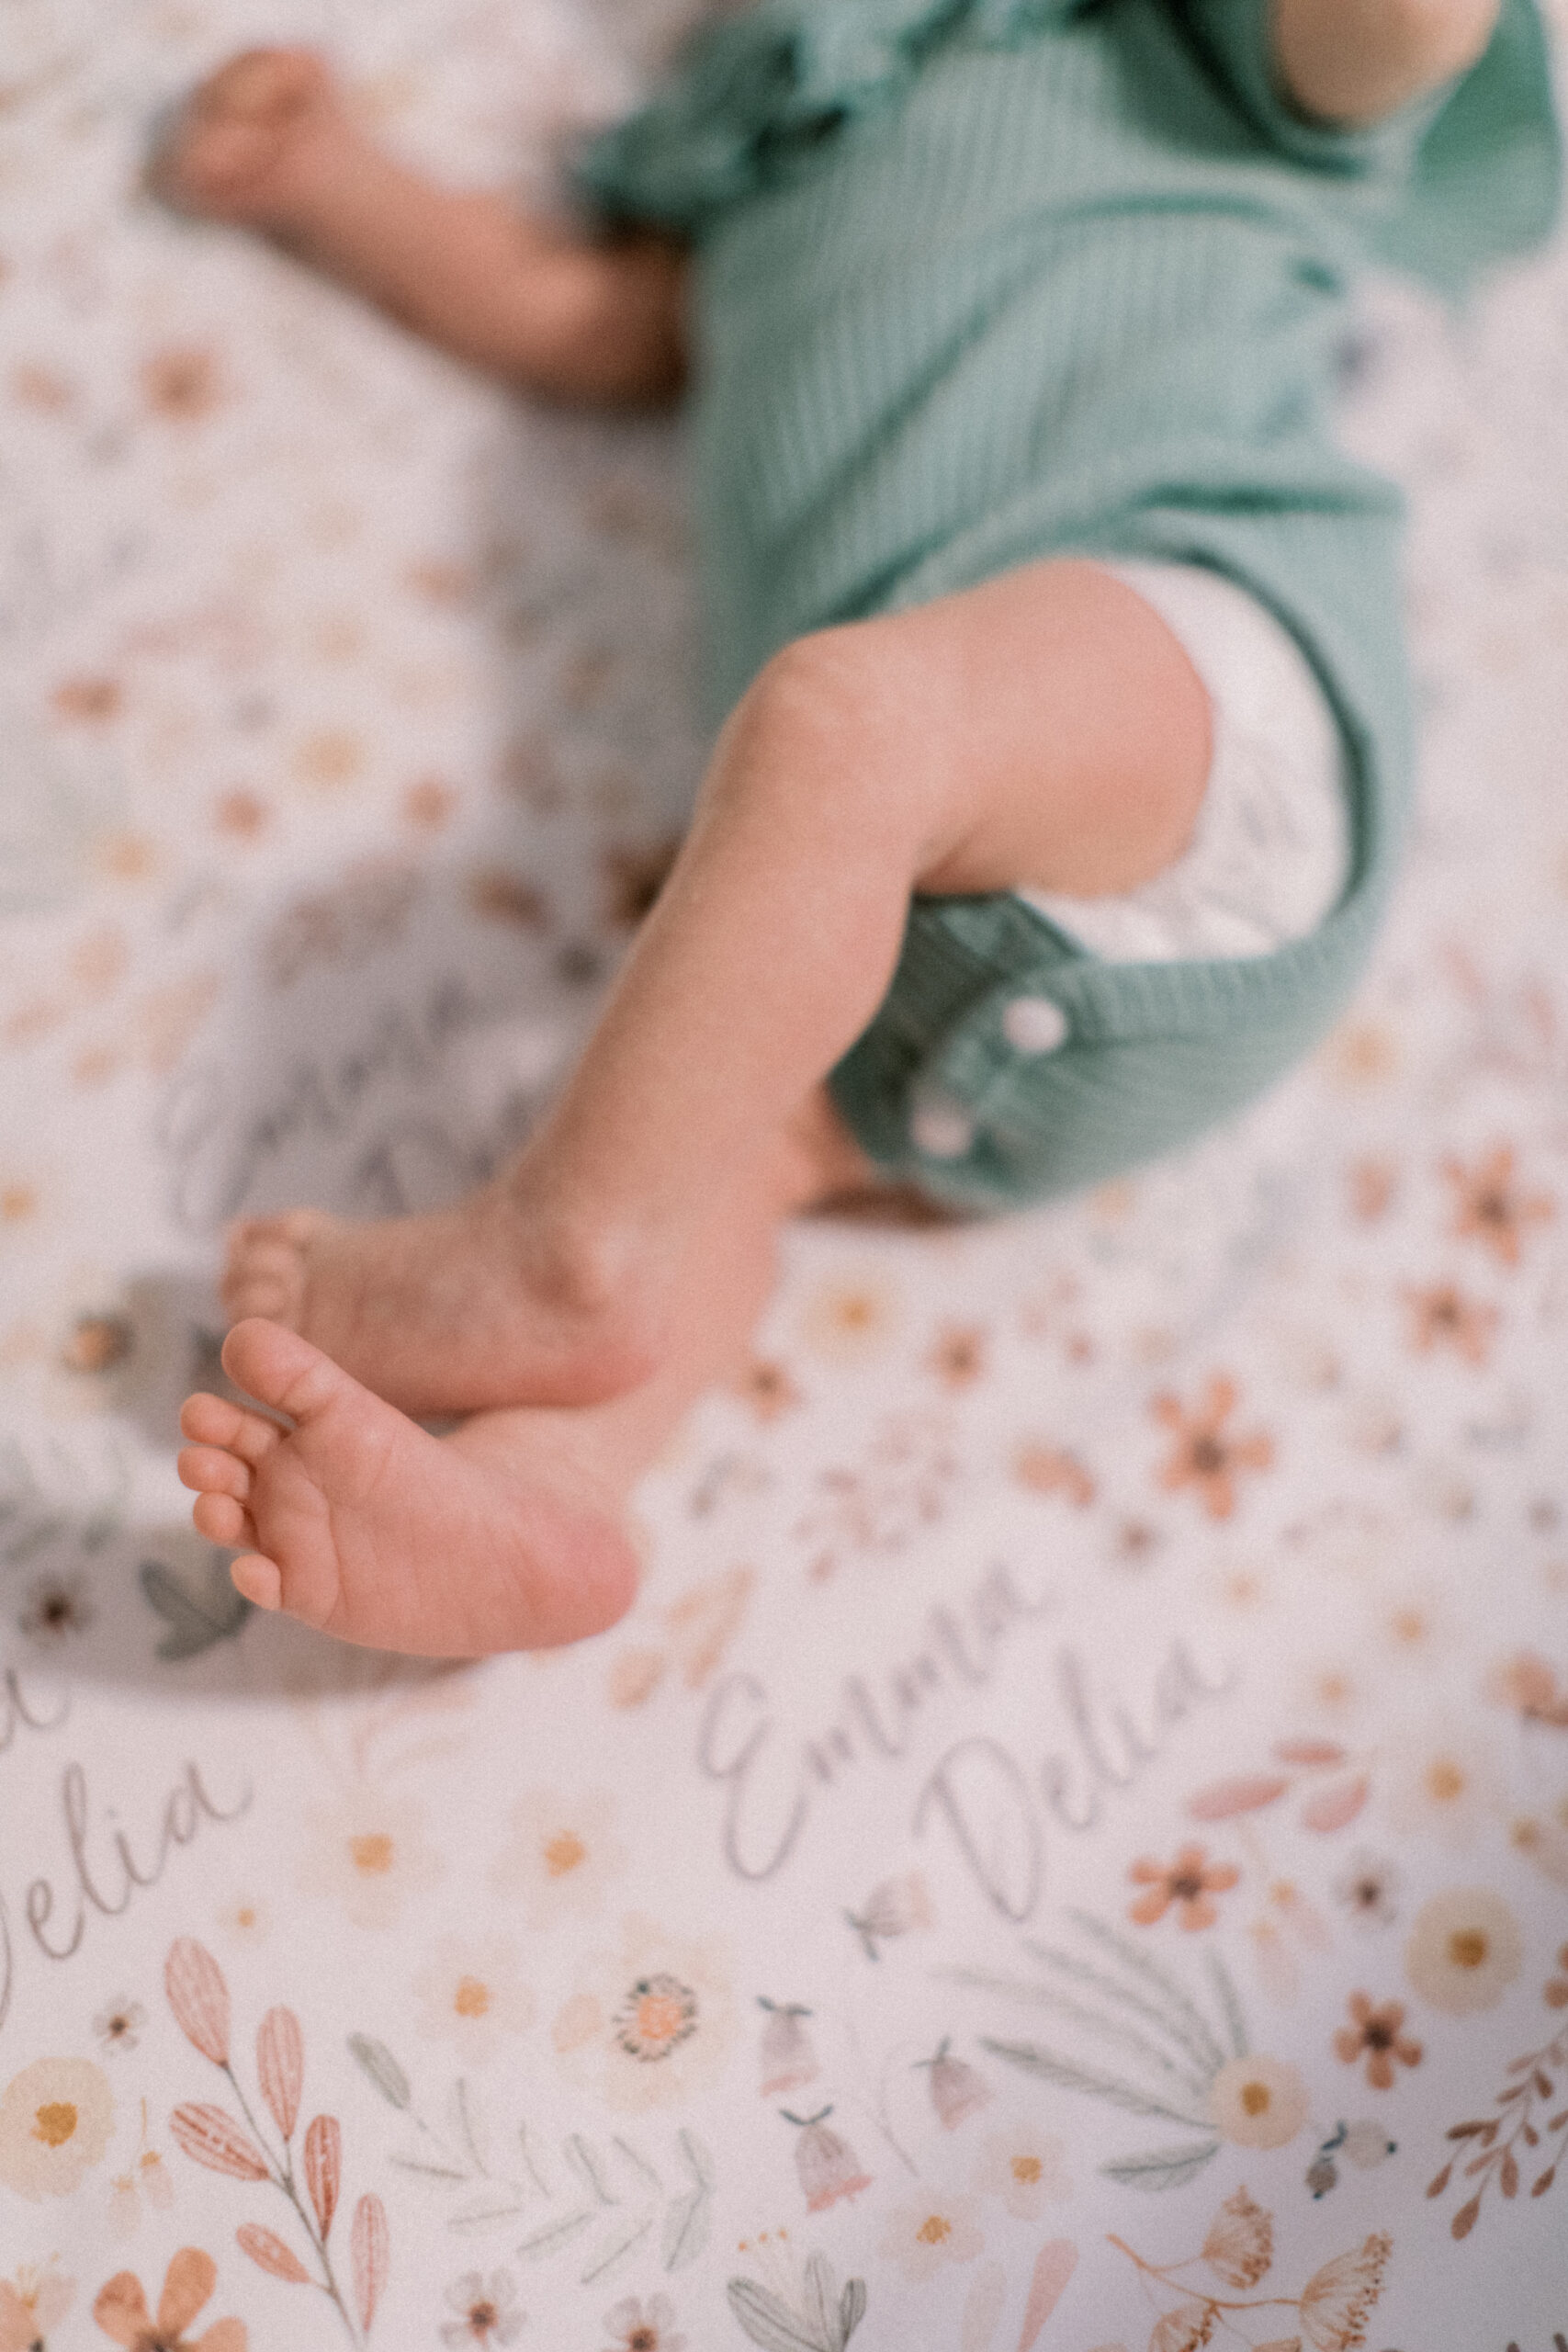 Maryland photographer captures newborn toes